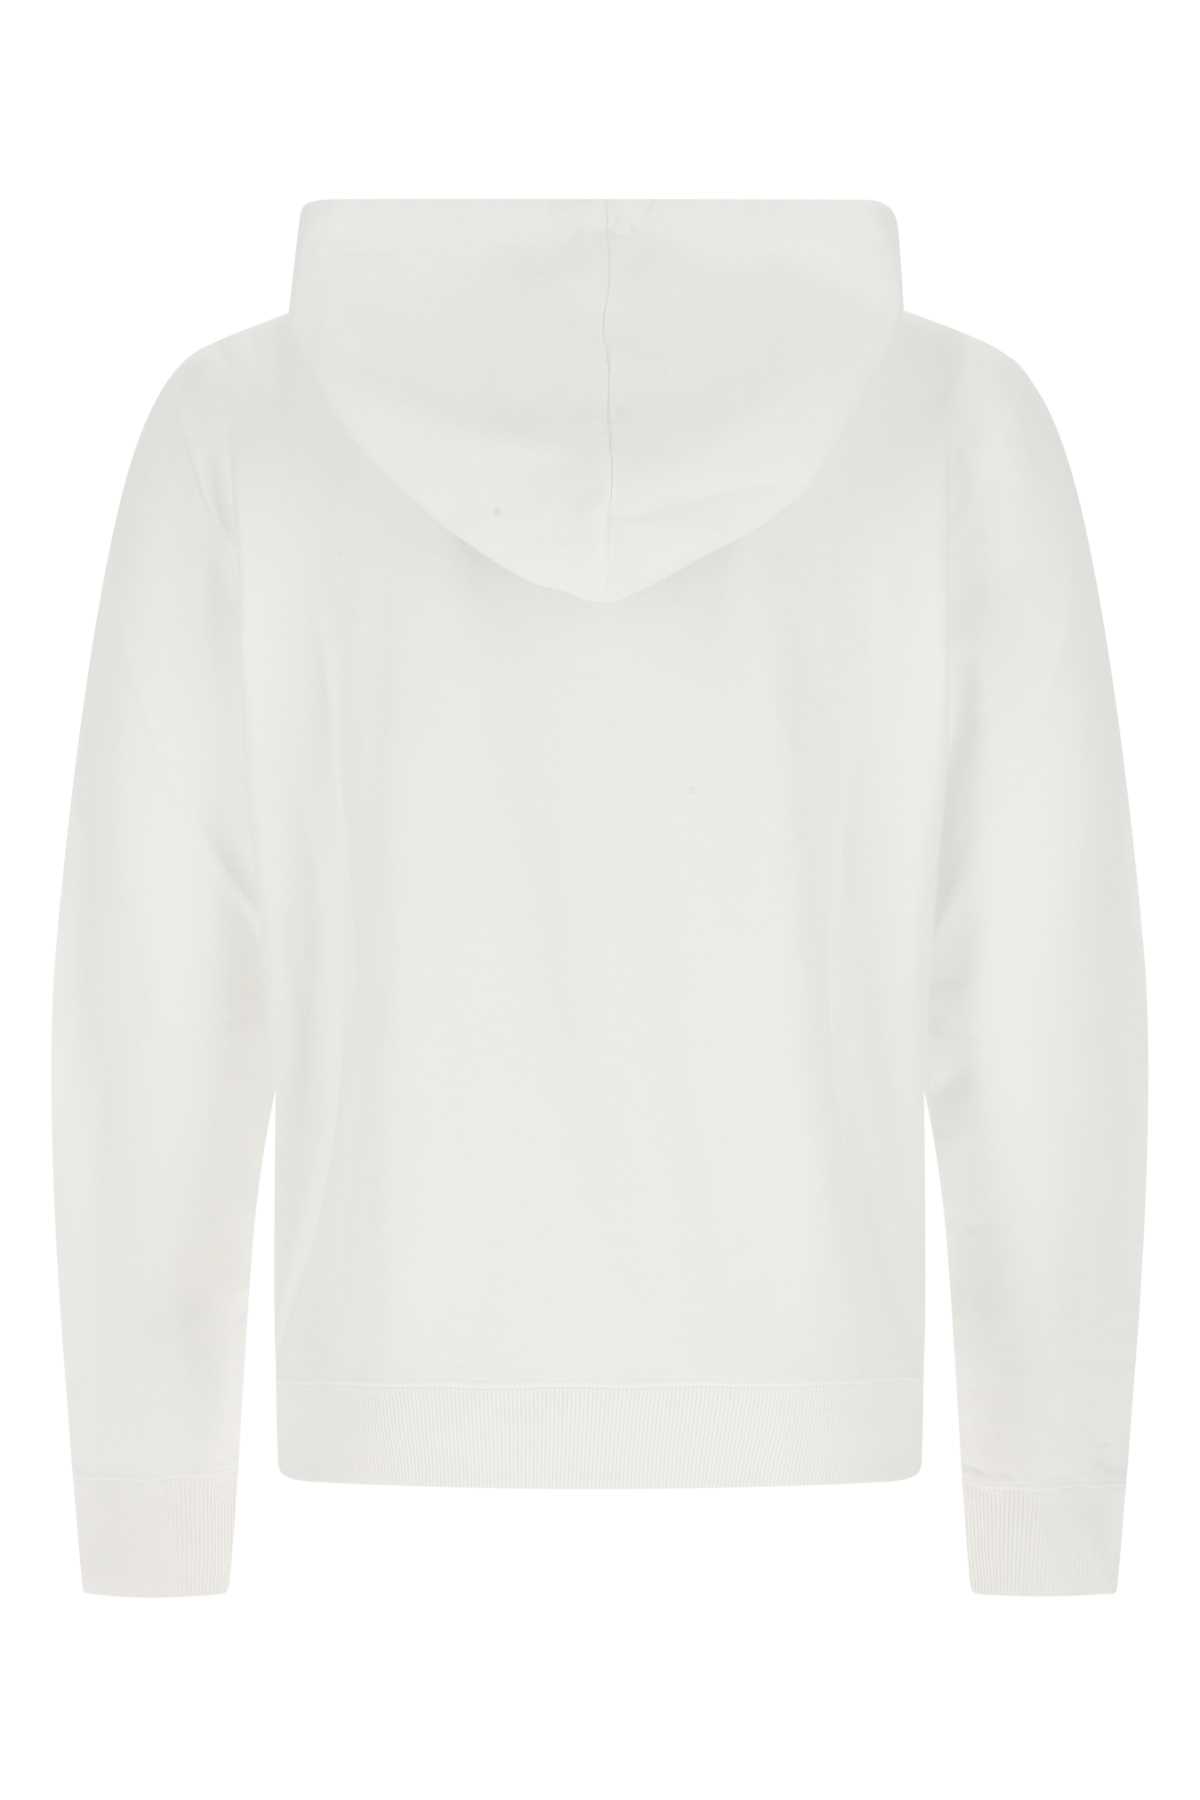 Saint Laurent White Cotton Sweatshirt In 9000